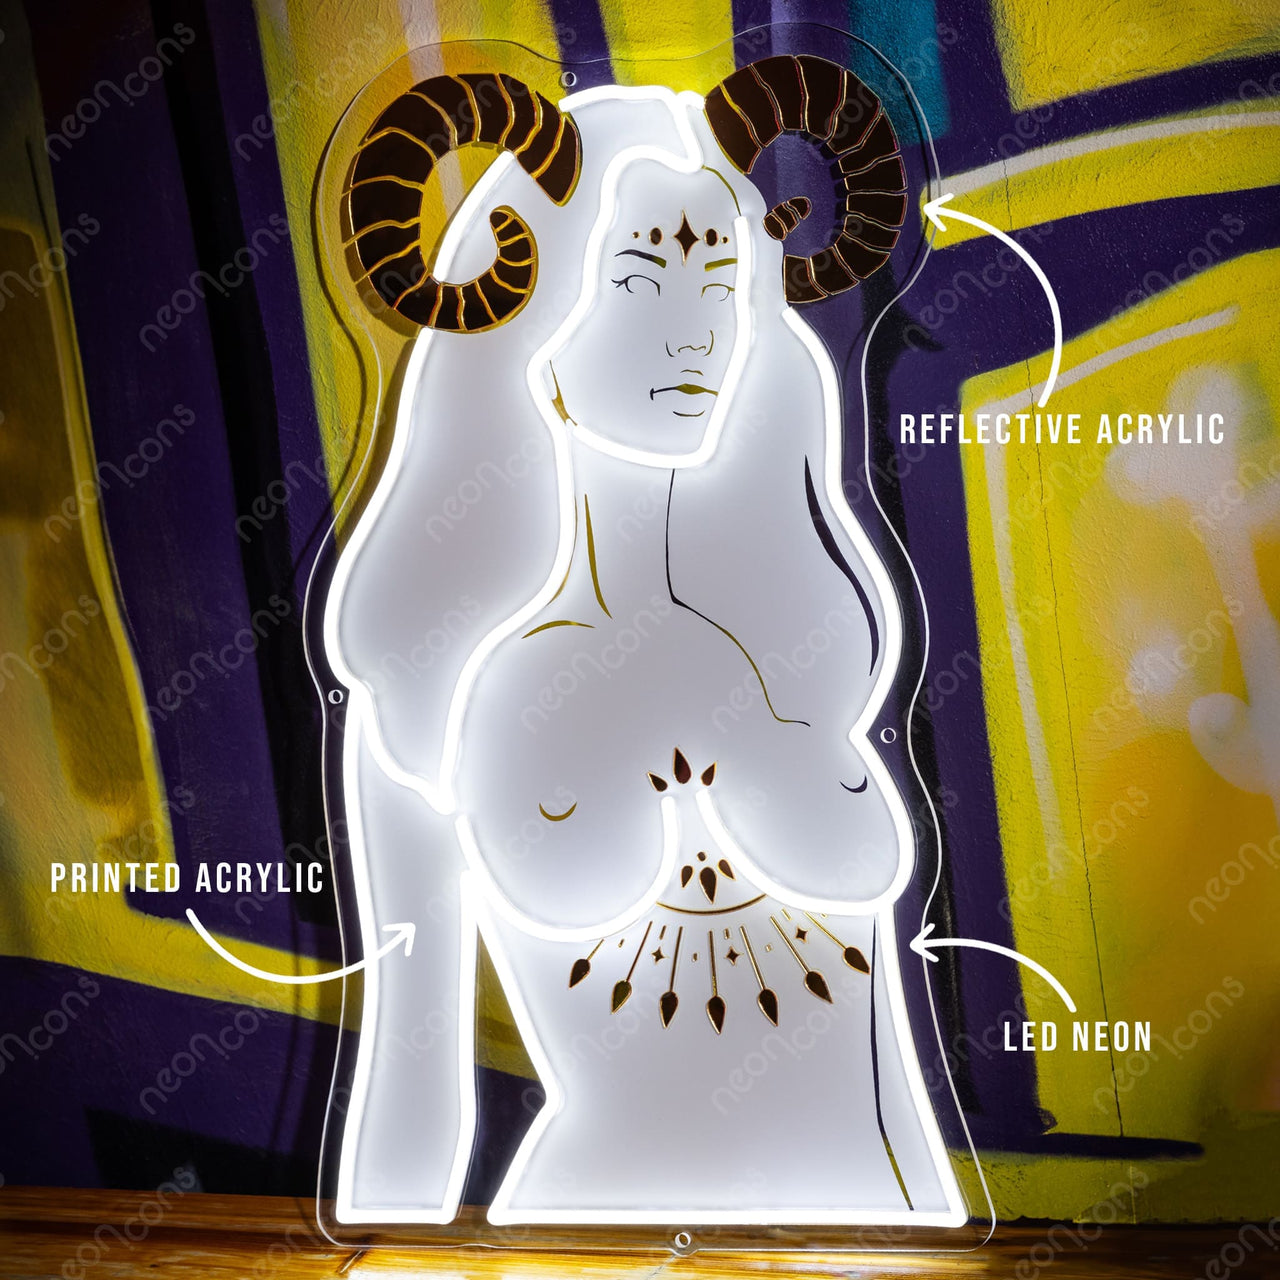 "Gemini Goddess" LED Neon x Print x Reflective Acrylic by Neon Icons